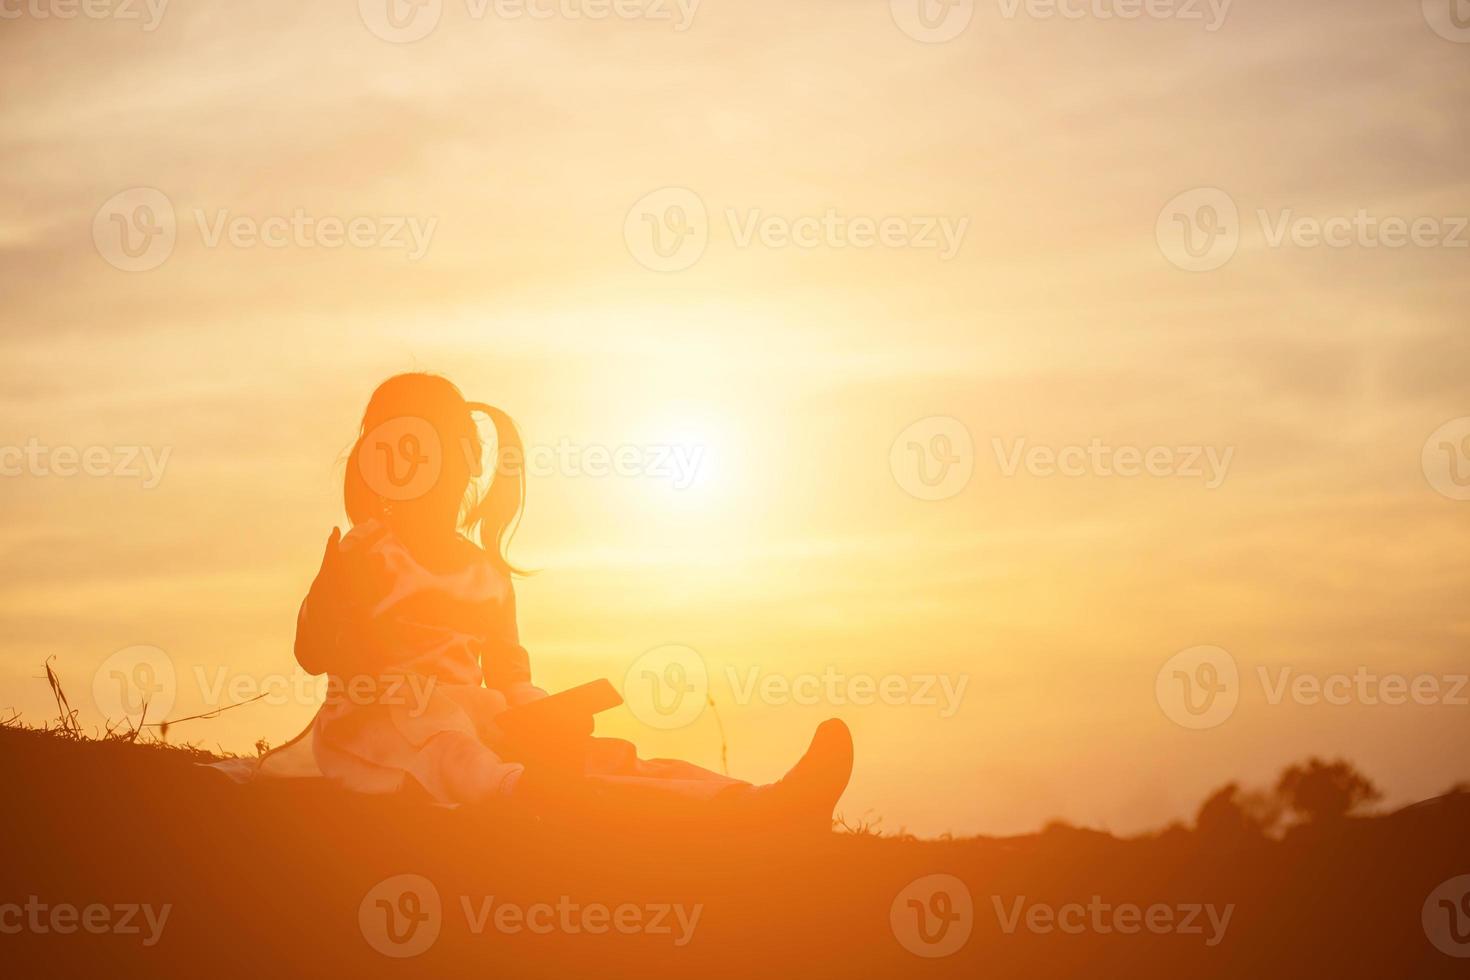 Kindersilhouette, Momente der Freude des Kindes. auf dem natursonnenuntergang foto